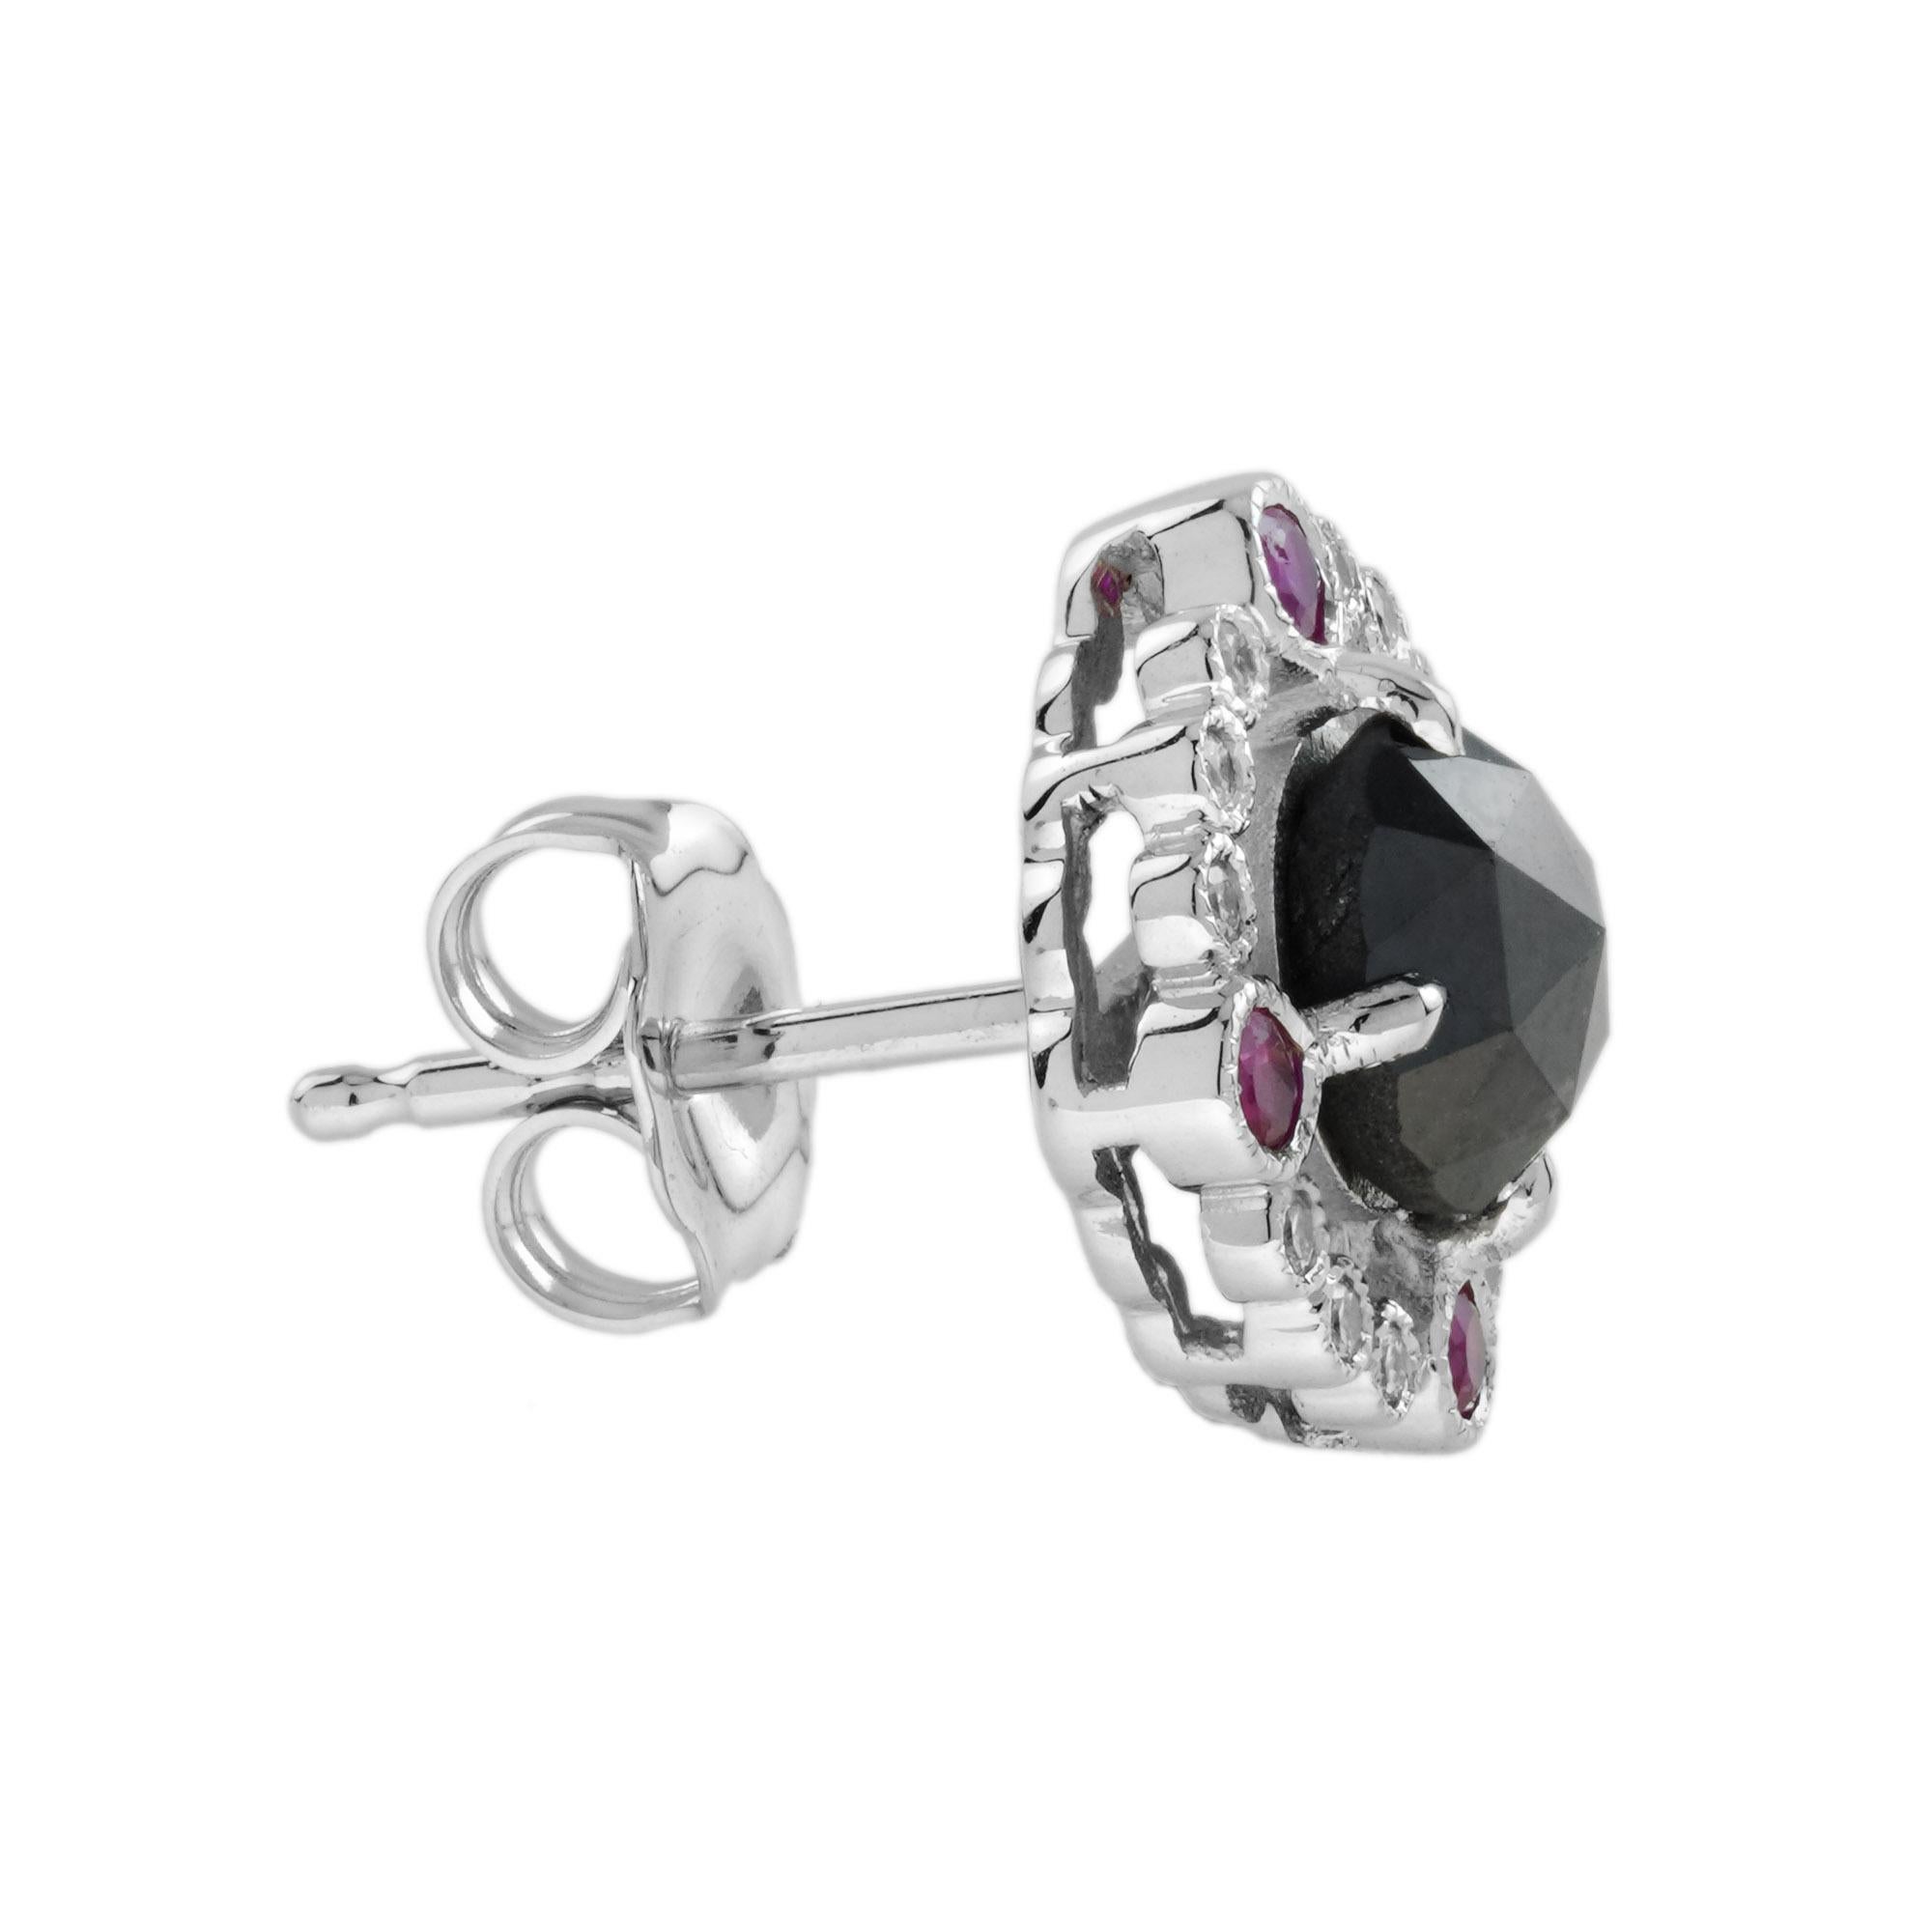 Rose Cut 2.02 Ct. Black Diamond and Ruby Art Deco Inspired Stud Earrings in 14K Gold